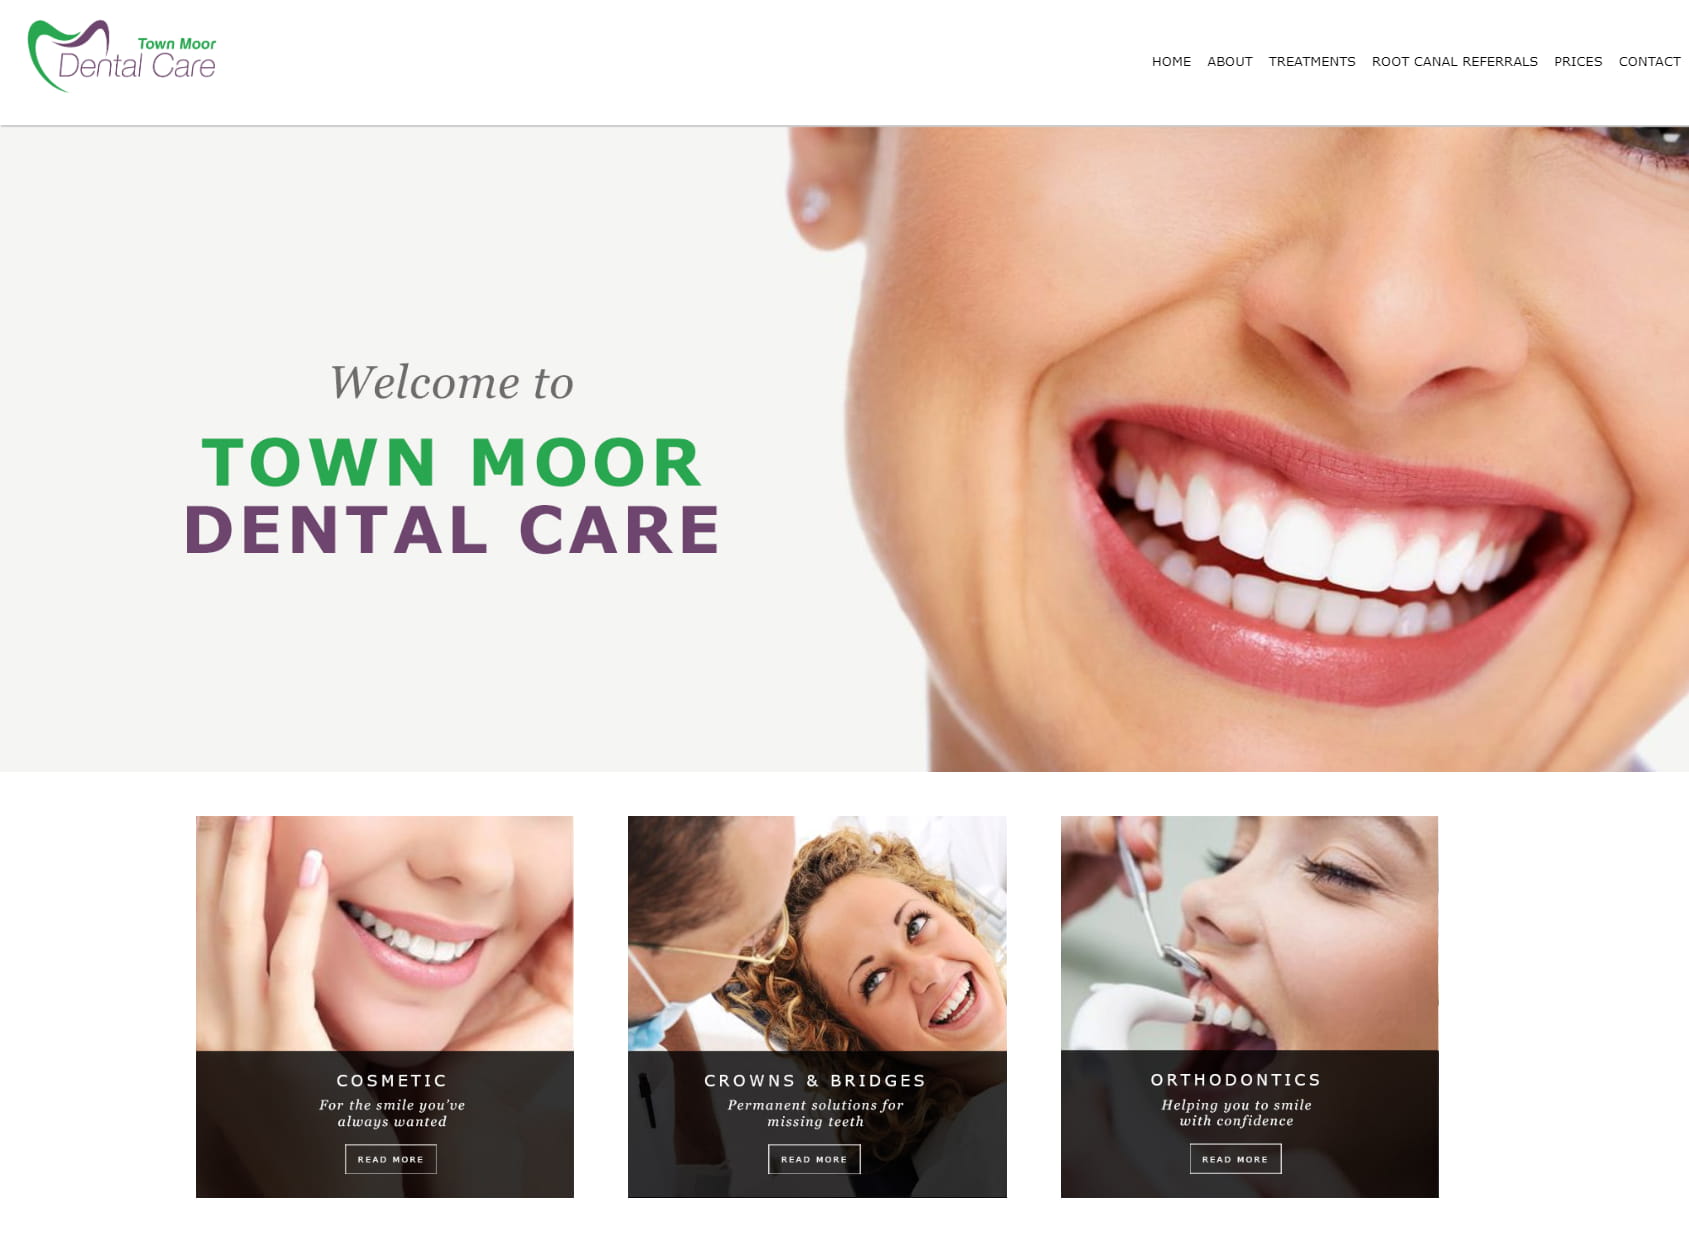 Town Moor Dental Care